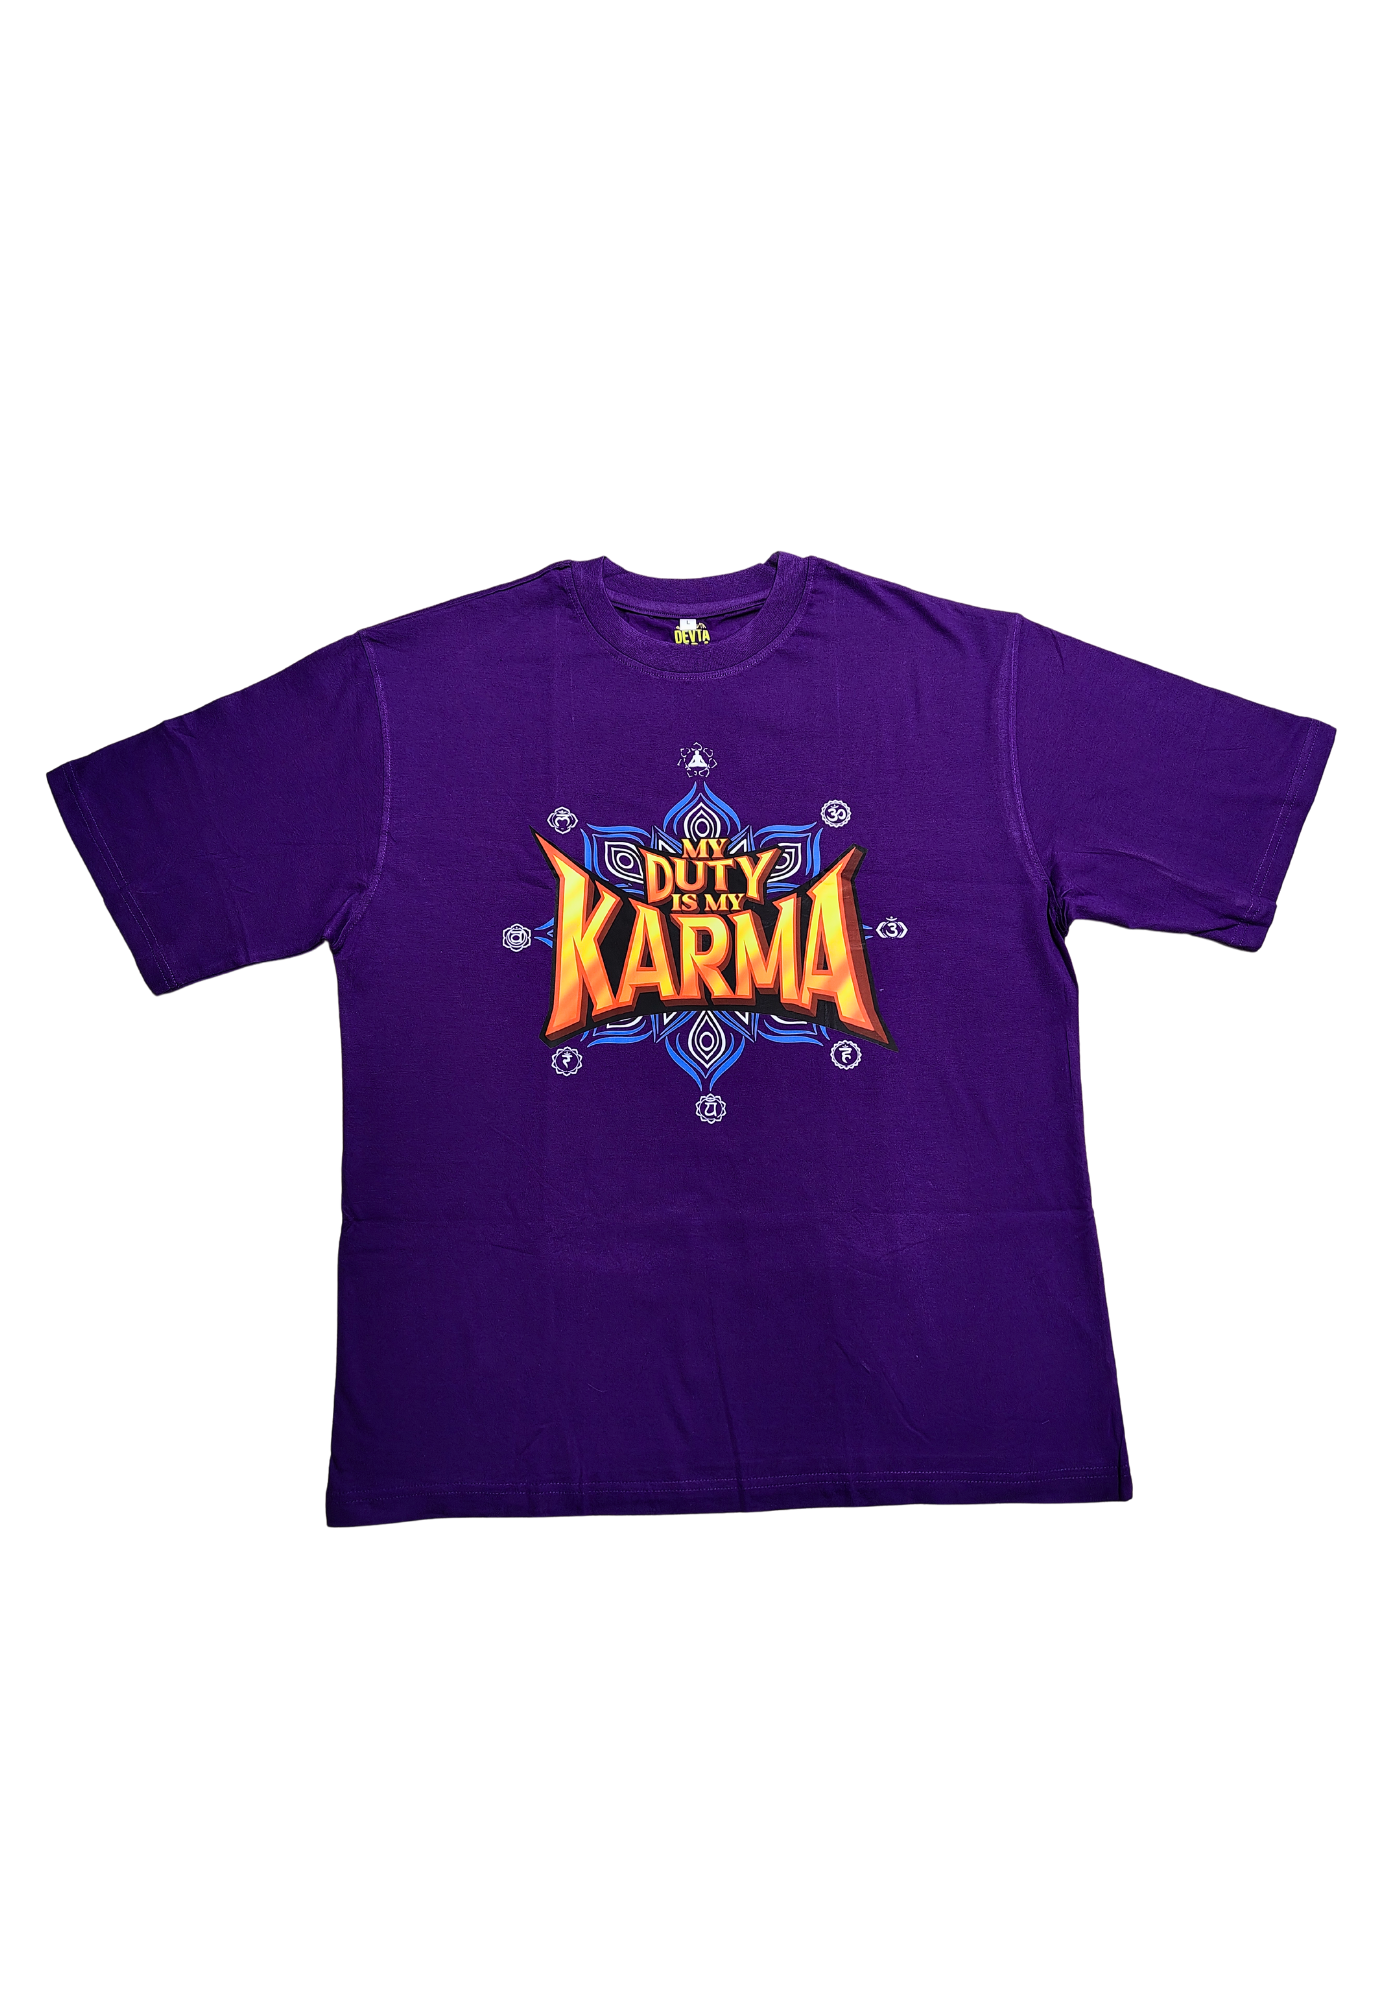 My Duty is my Karma Oversized Tshirt